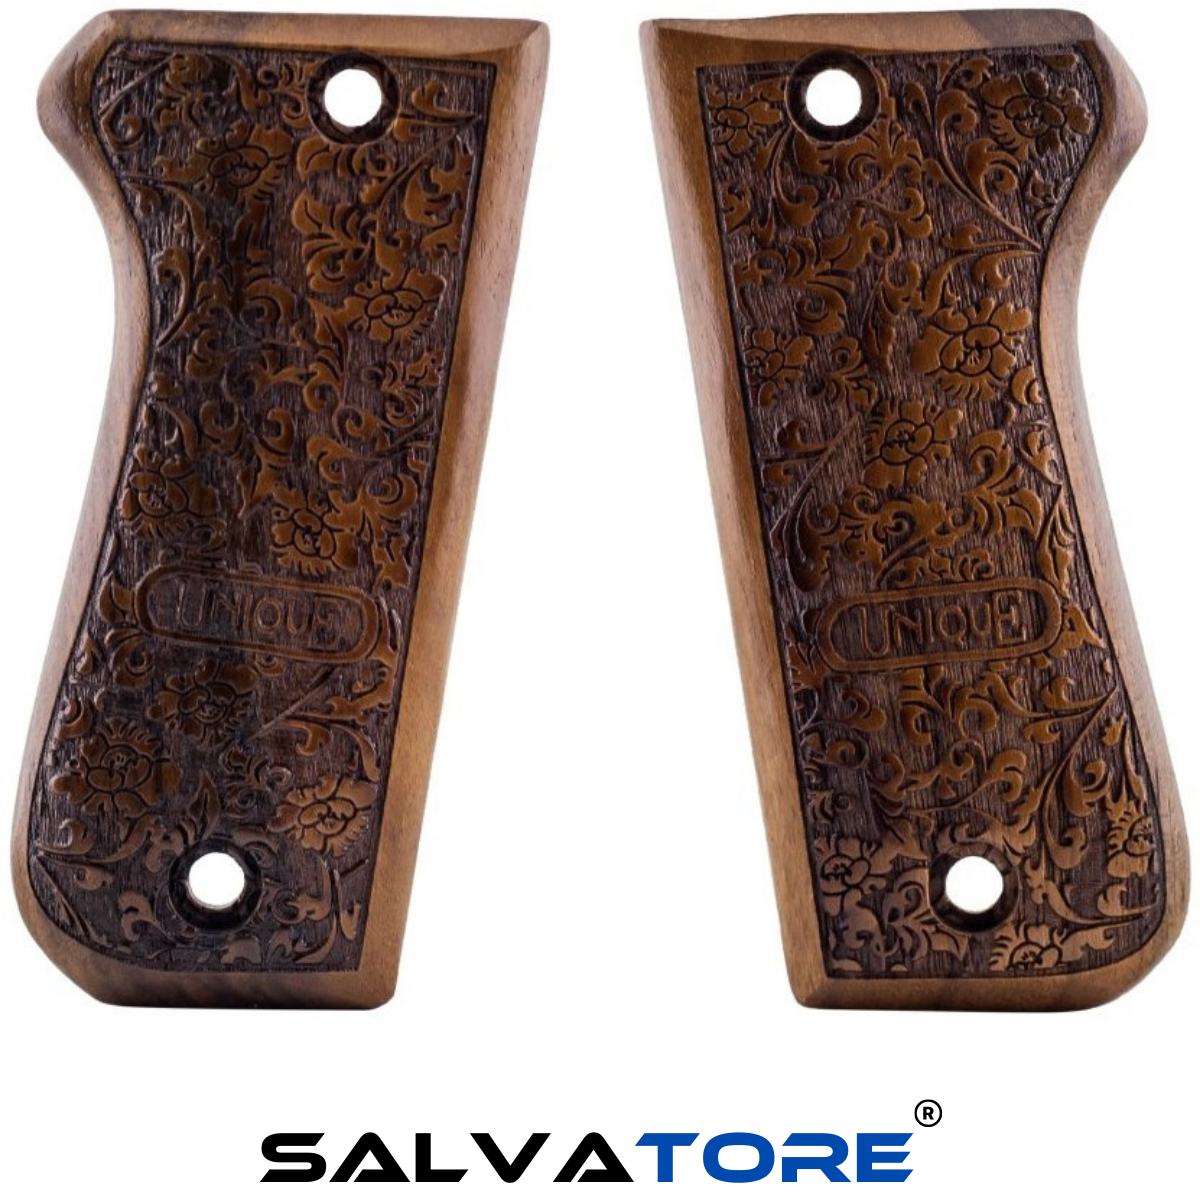 Salvatore Pistol Grips Revolver Grips For UNIQUE Handmade Walnut Gun Accessories Hunting Shooting